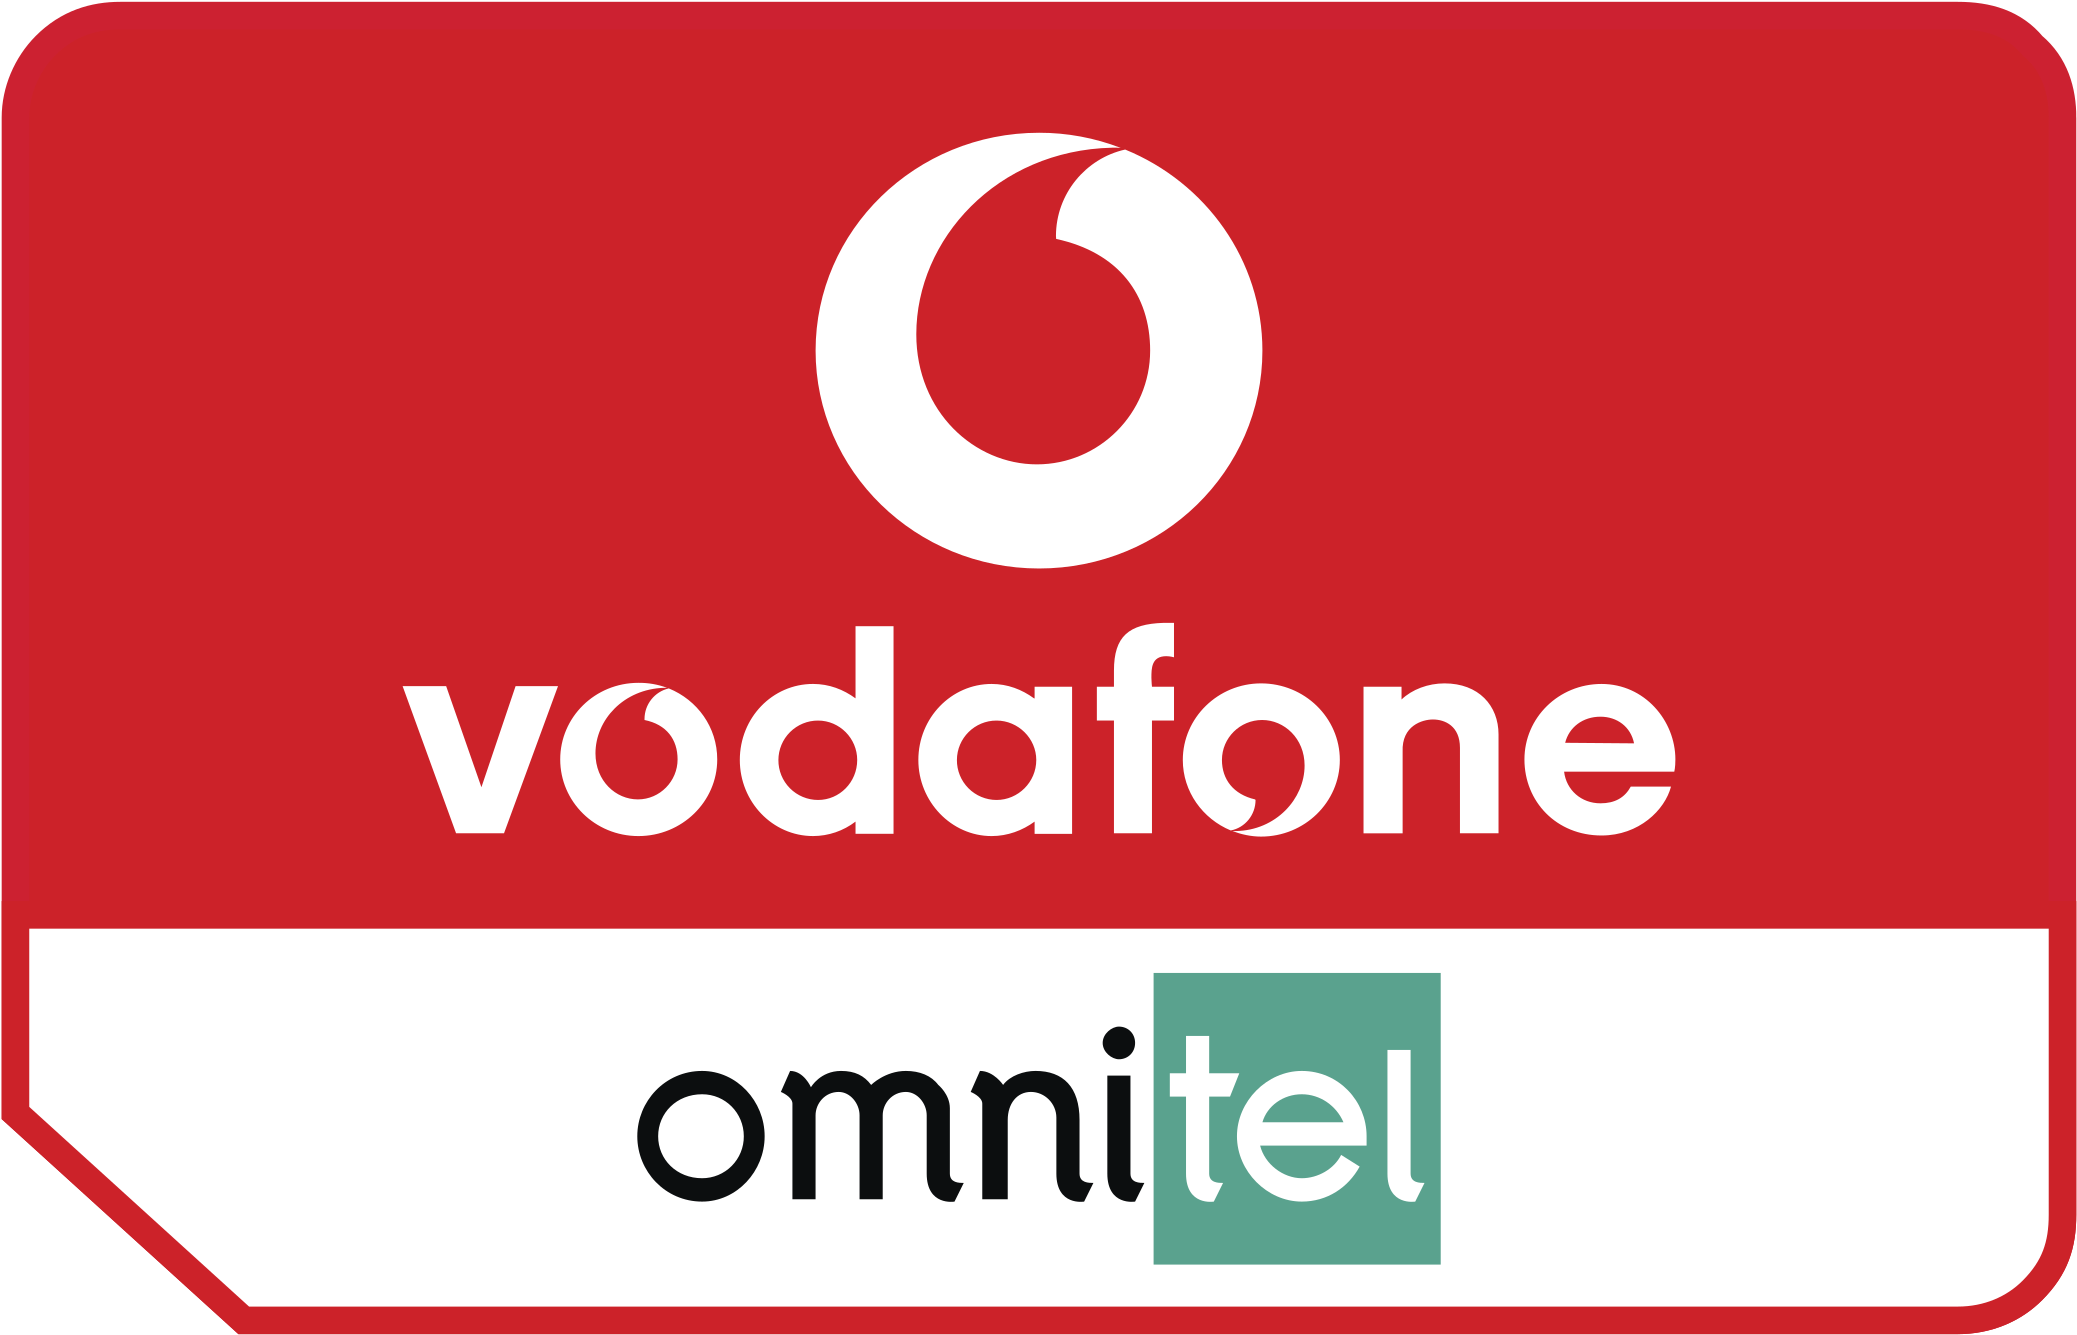 Vodafone Omnitel Branding